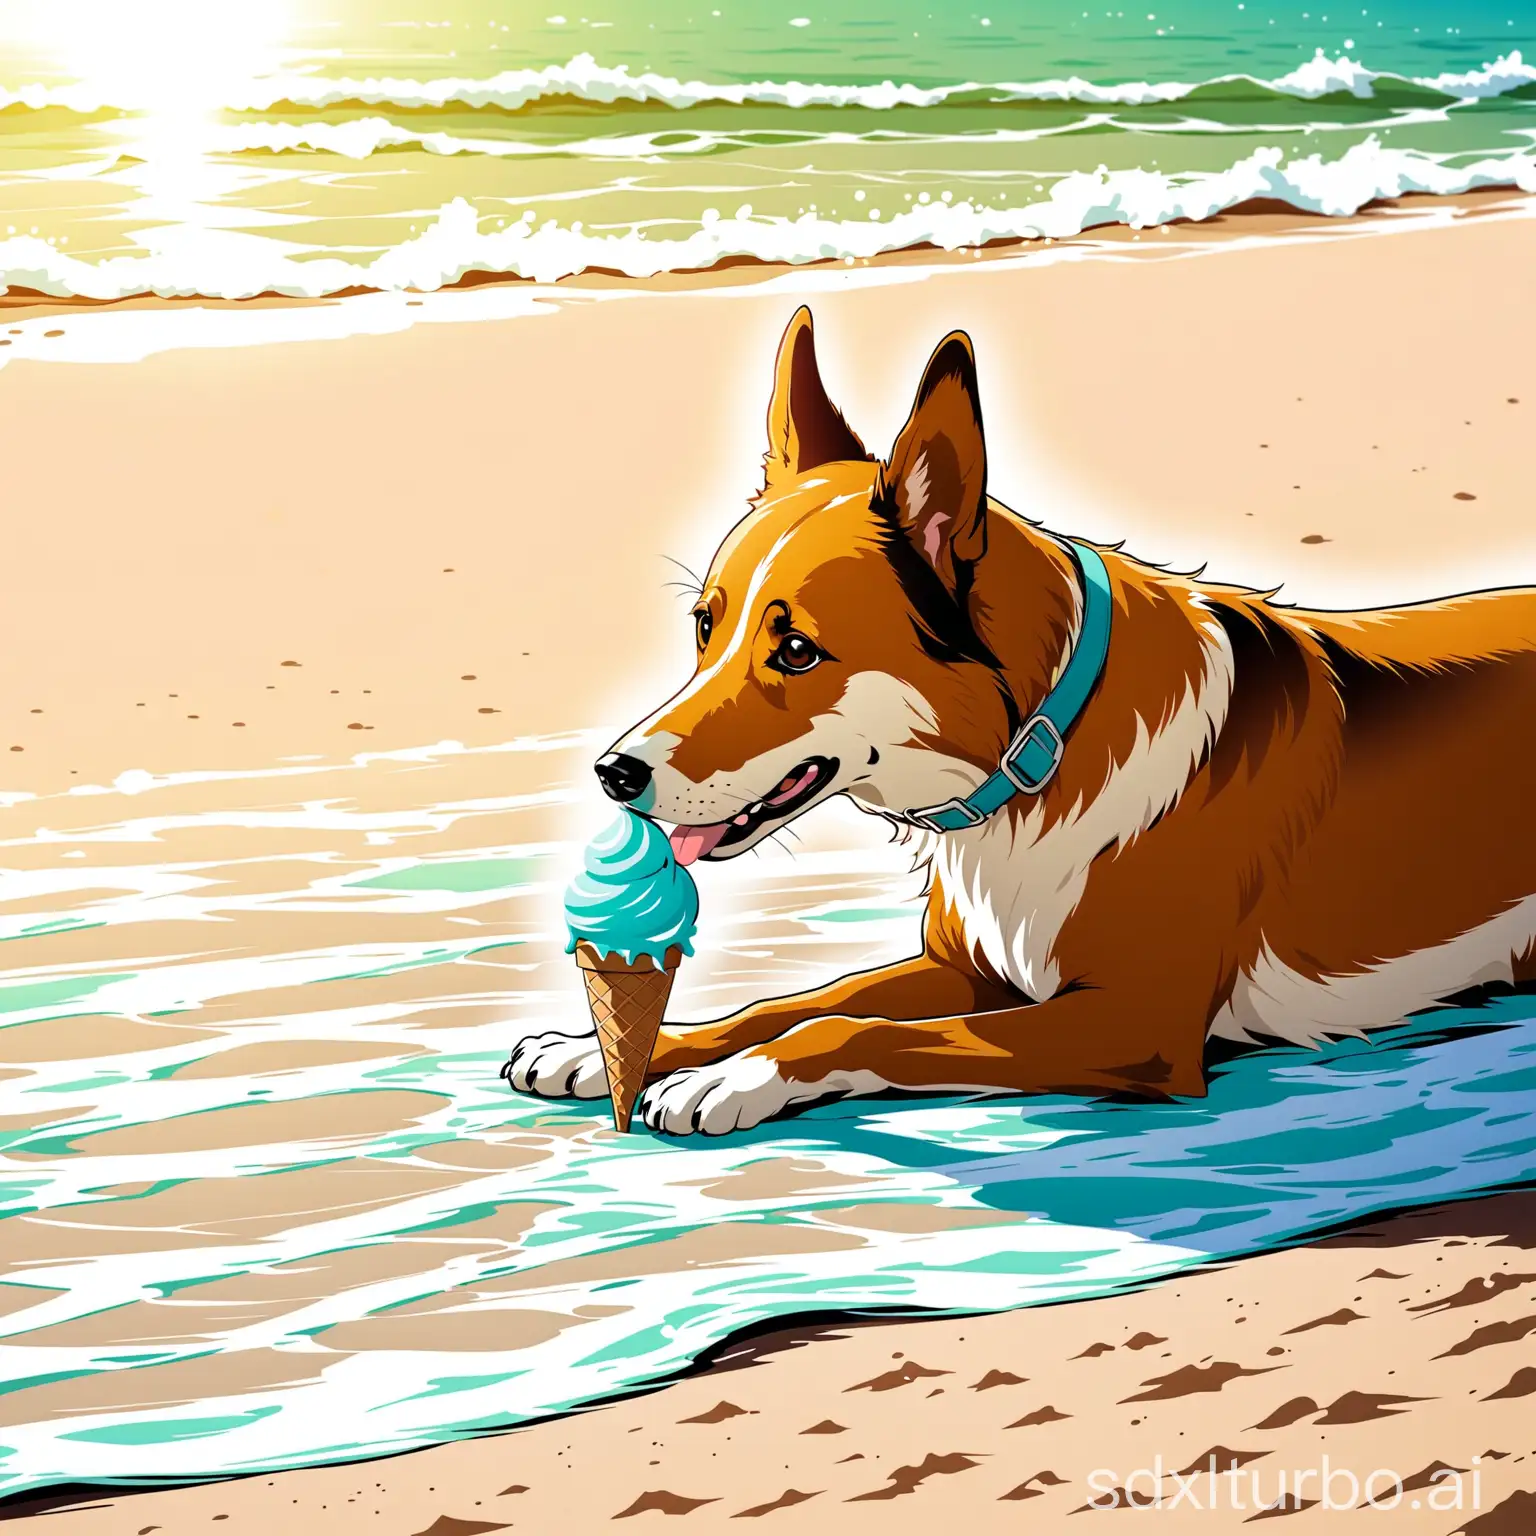 Dog-Enjoying-Ice-Cream-Treat-at-Sunny-Beach